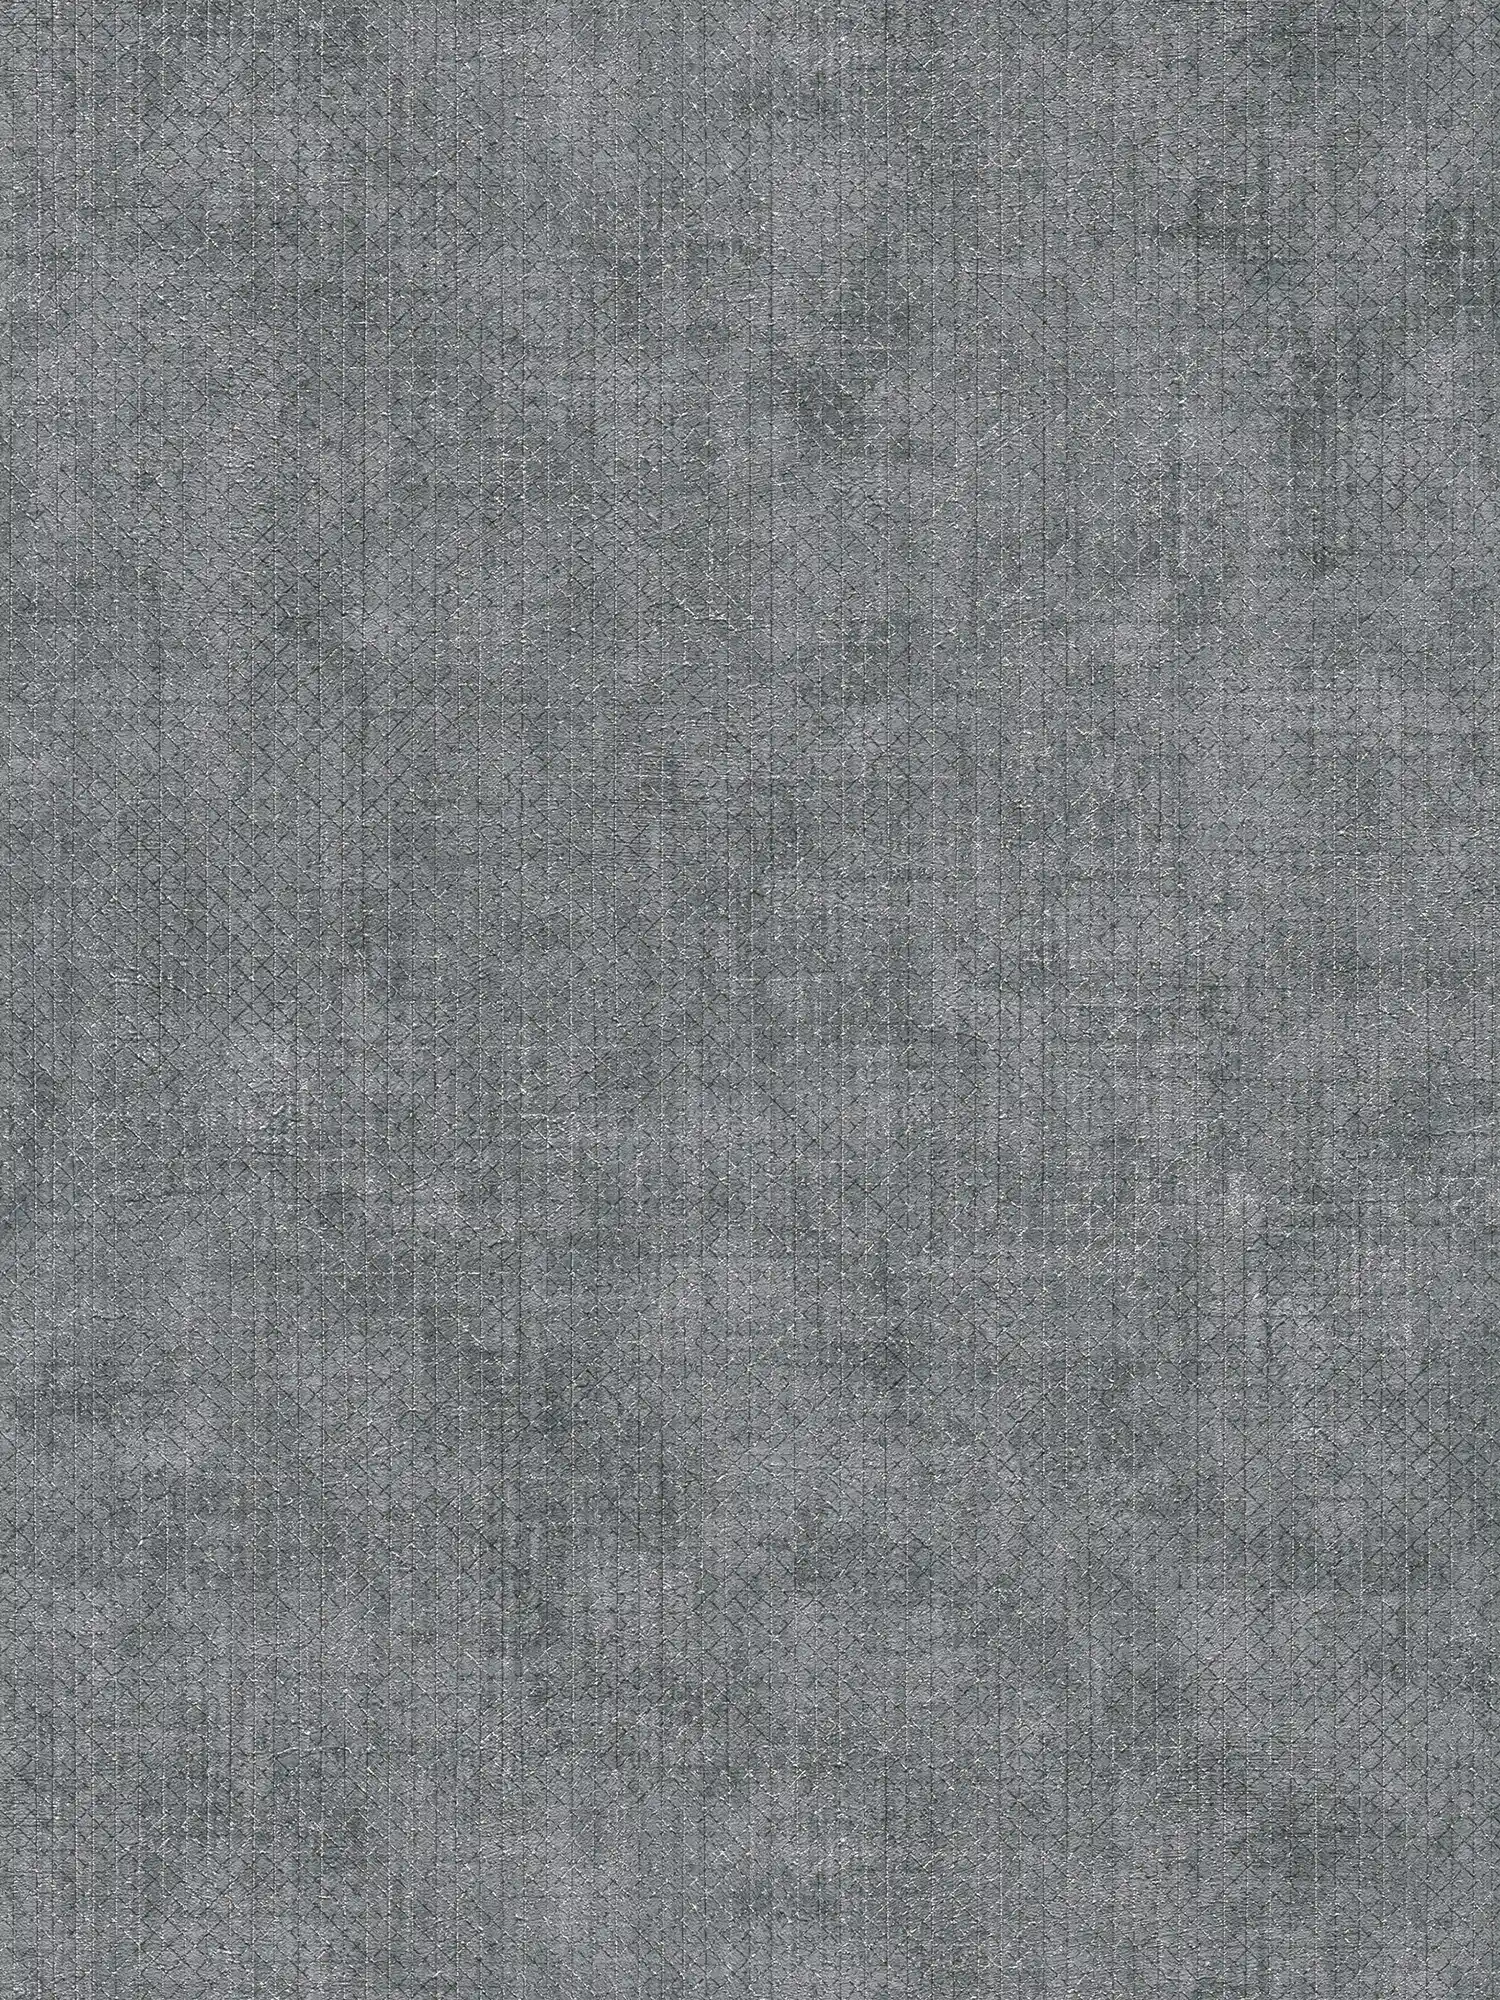 Dark grey mottled wallpaper with metallic line pattern
